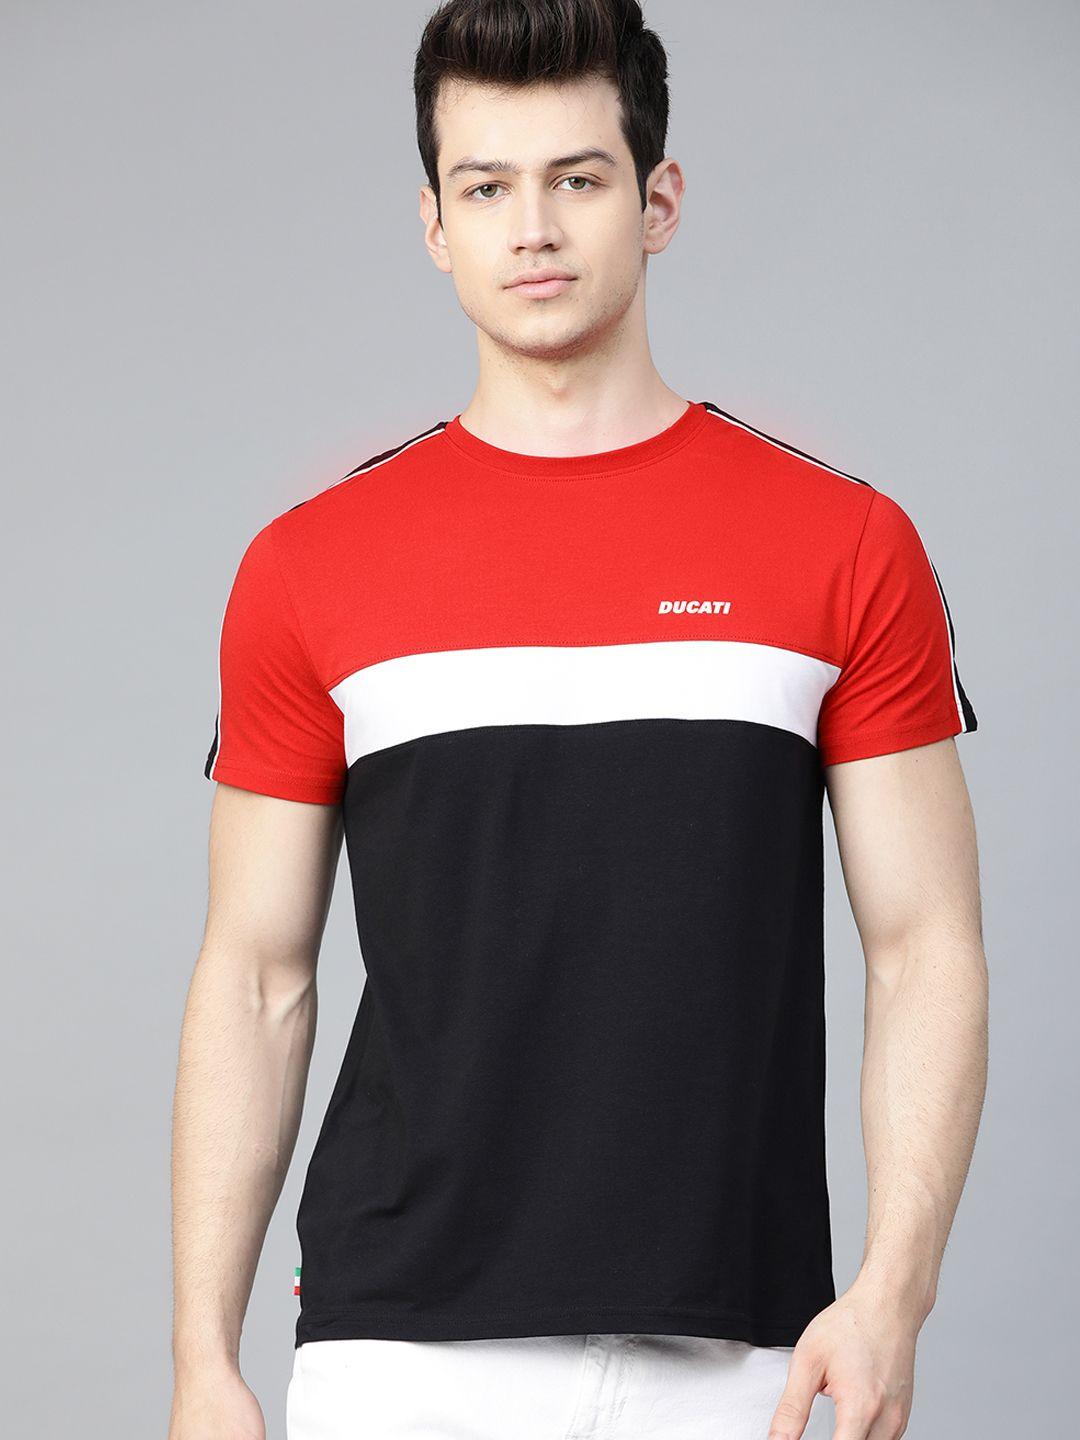 ducati men black & red colourblocked round neck t-shirt